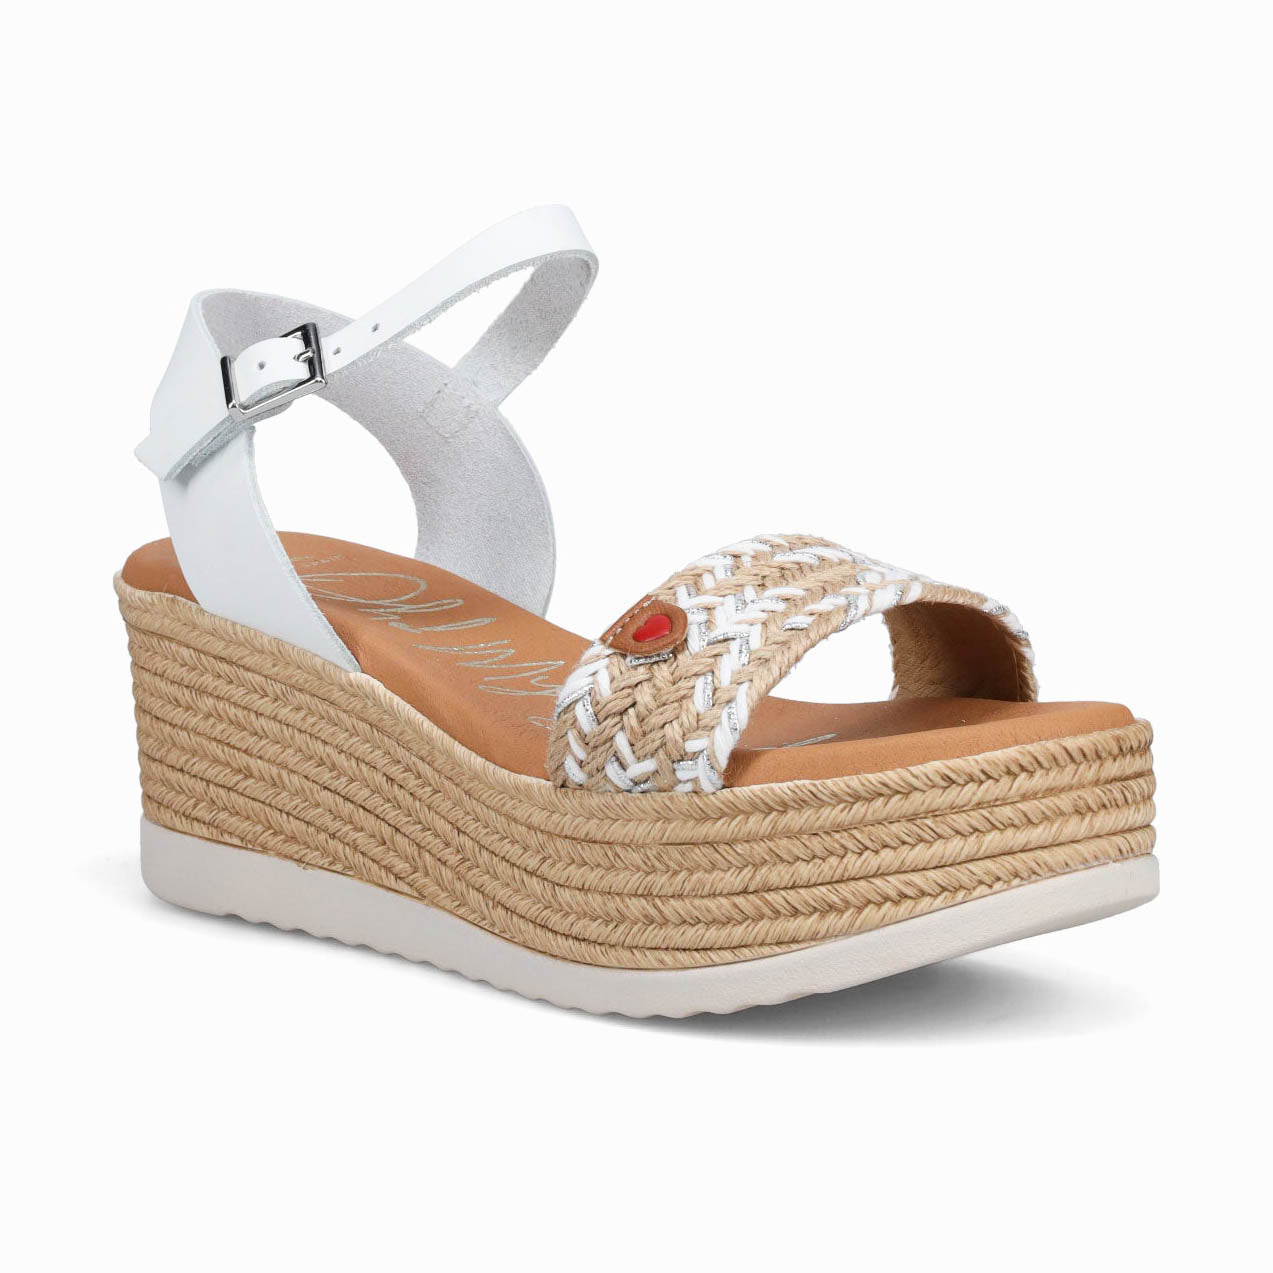 Oh My Sandals sandalo zeppa bianco con fascia in corda con taccosottopiede memor